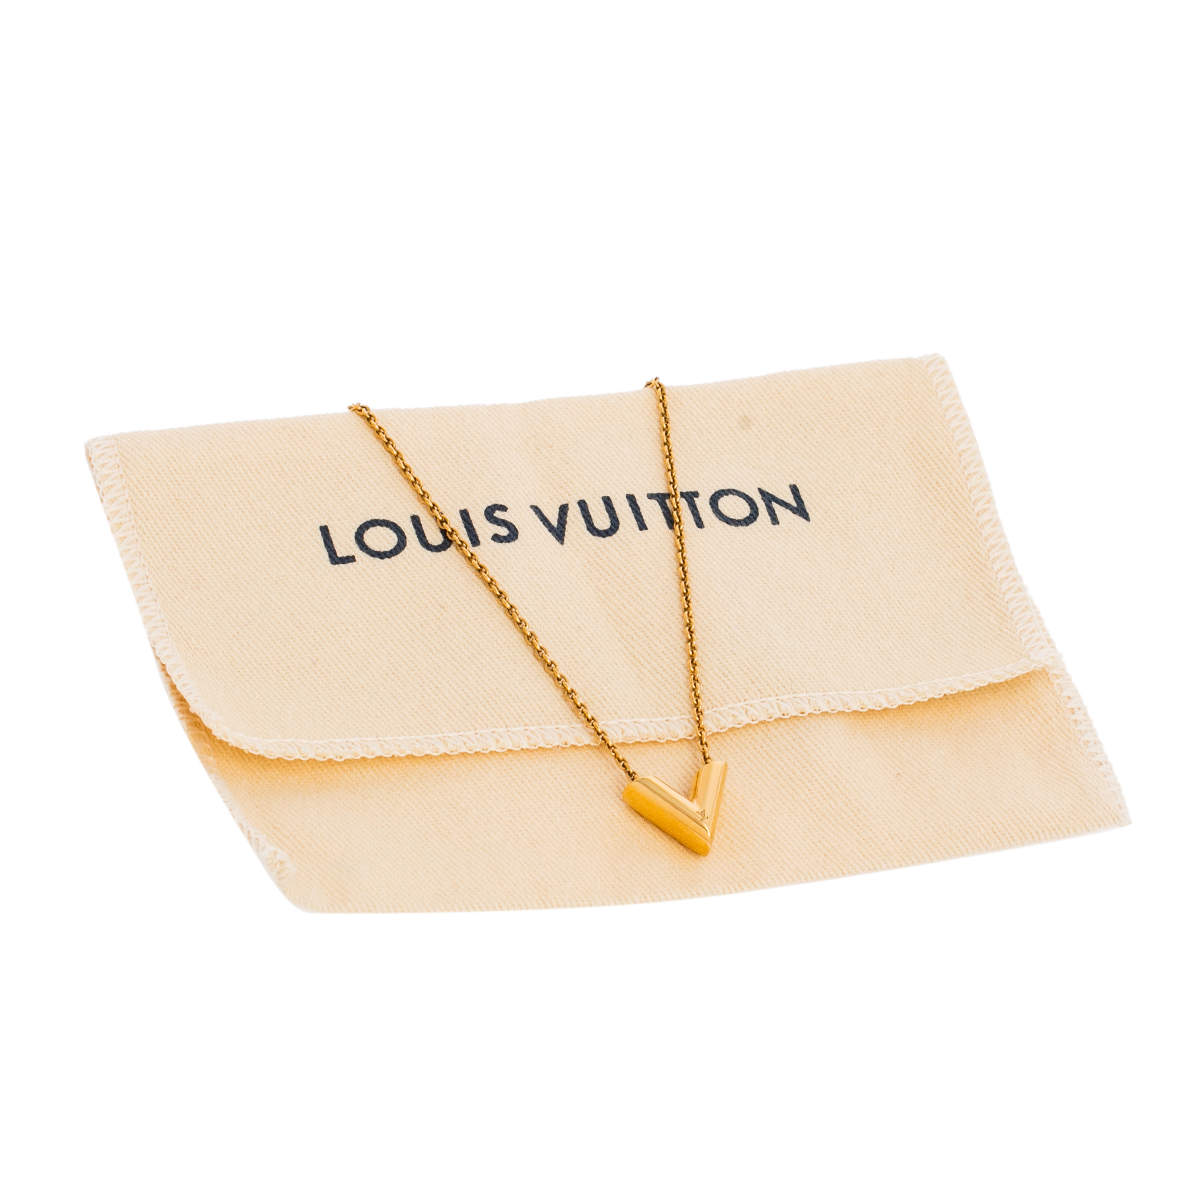 Louis Vuitton Essential V Pink Crystal Rose Gold Tone Chain Link Bracelet  Louis Vuitton | The Luxury Closet